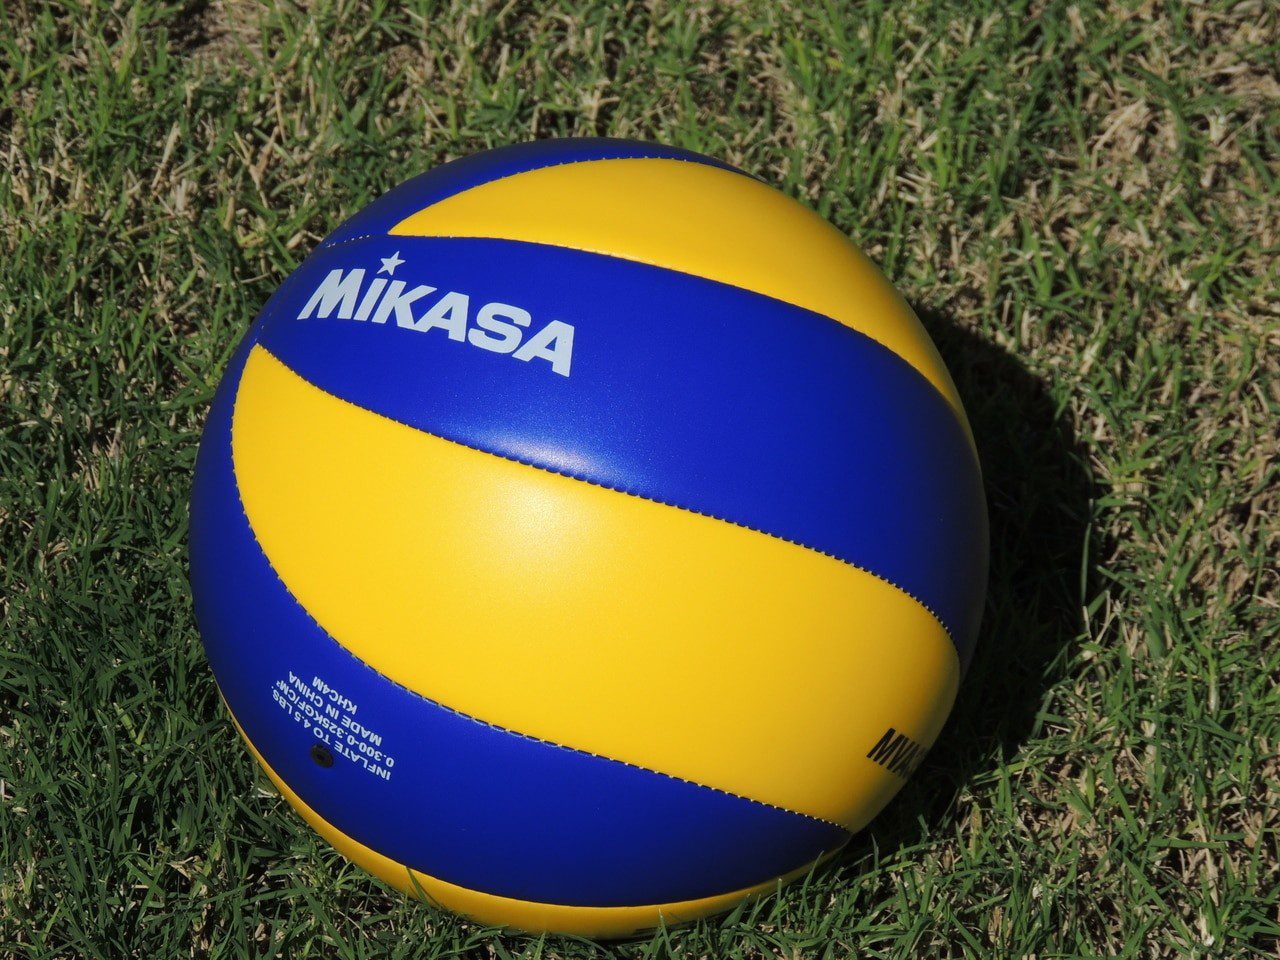 Mikasa Commemorative Olympic Volleyball